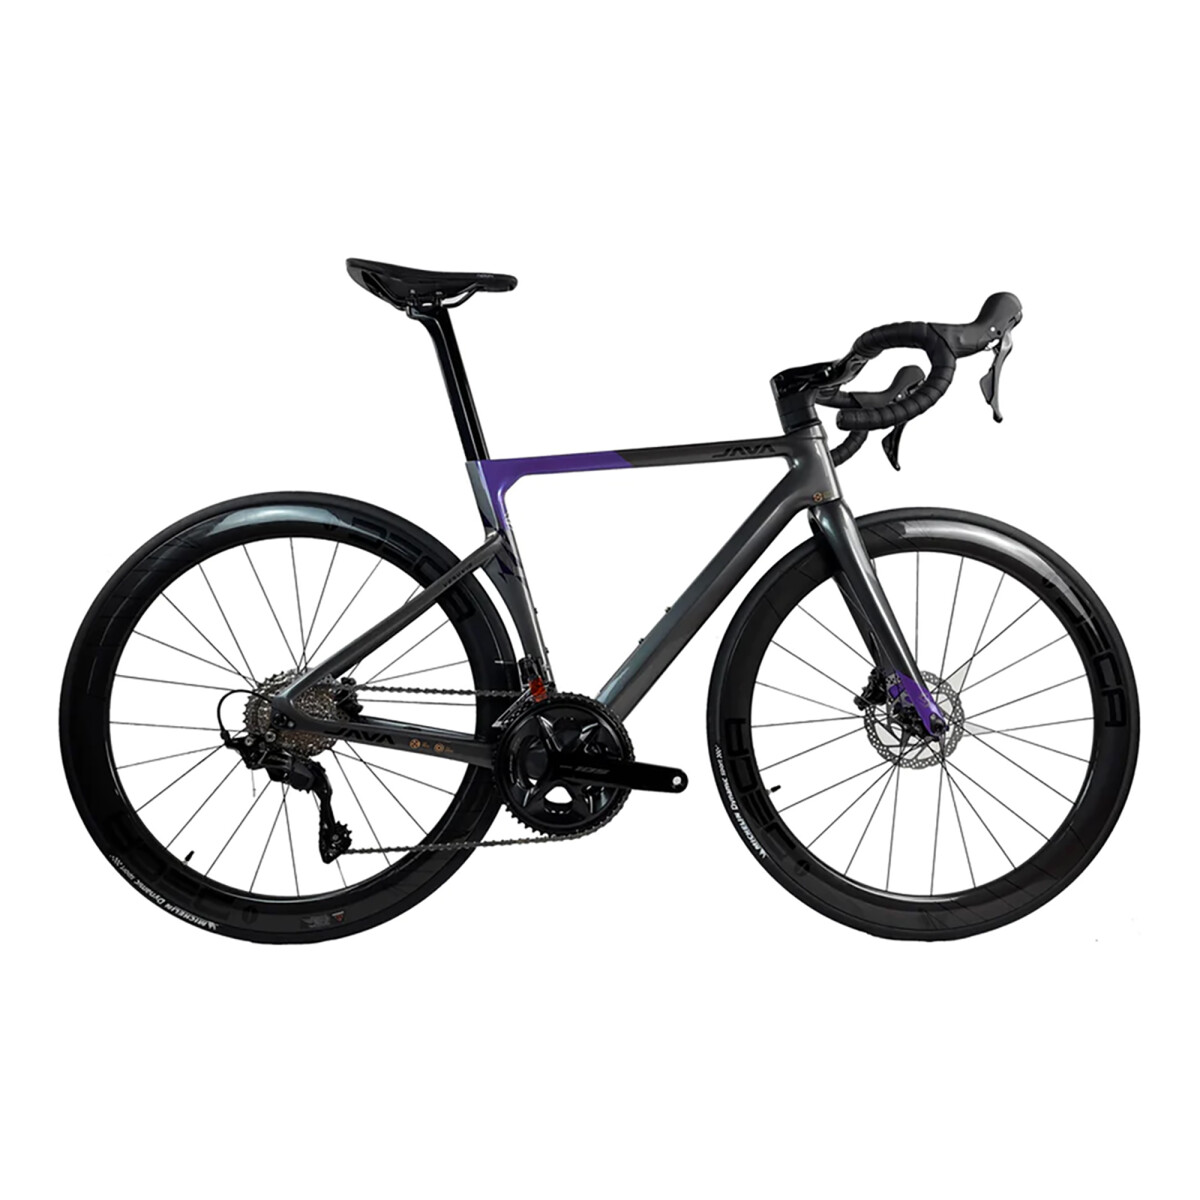 Java - Bicicleta de Ruta VESUVIO R7170 - 24 Velocidades, Talle S. Color Púrpura. - PURPURA 